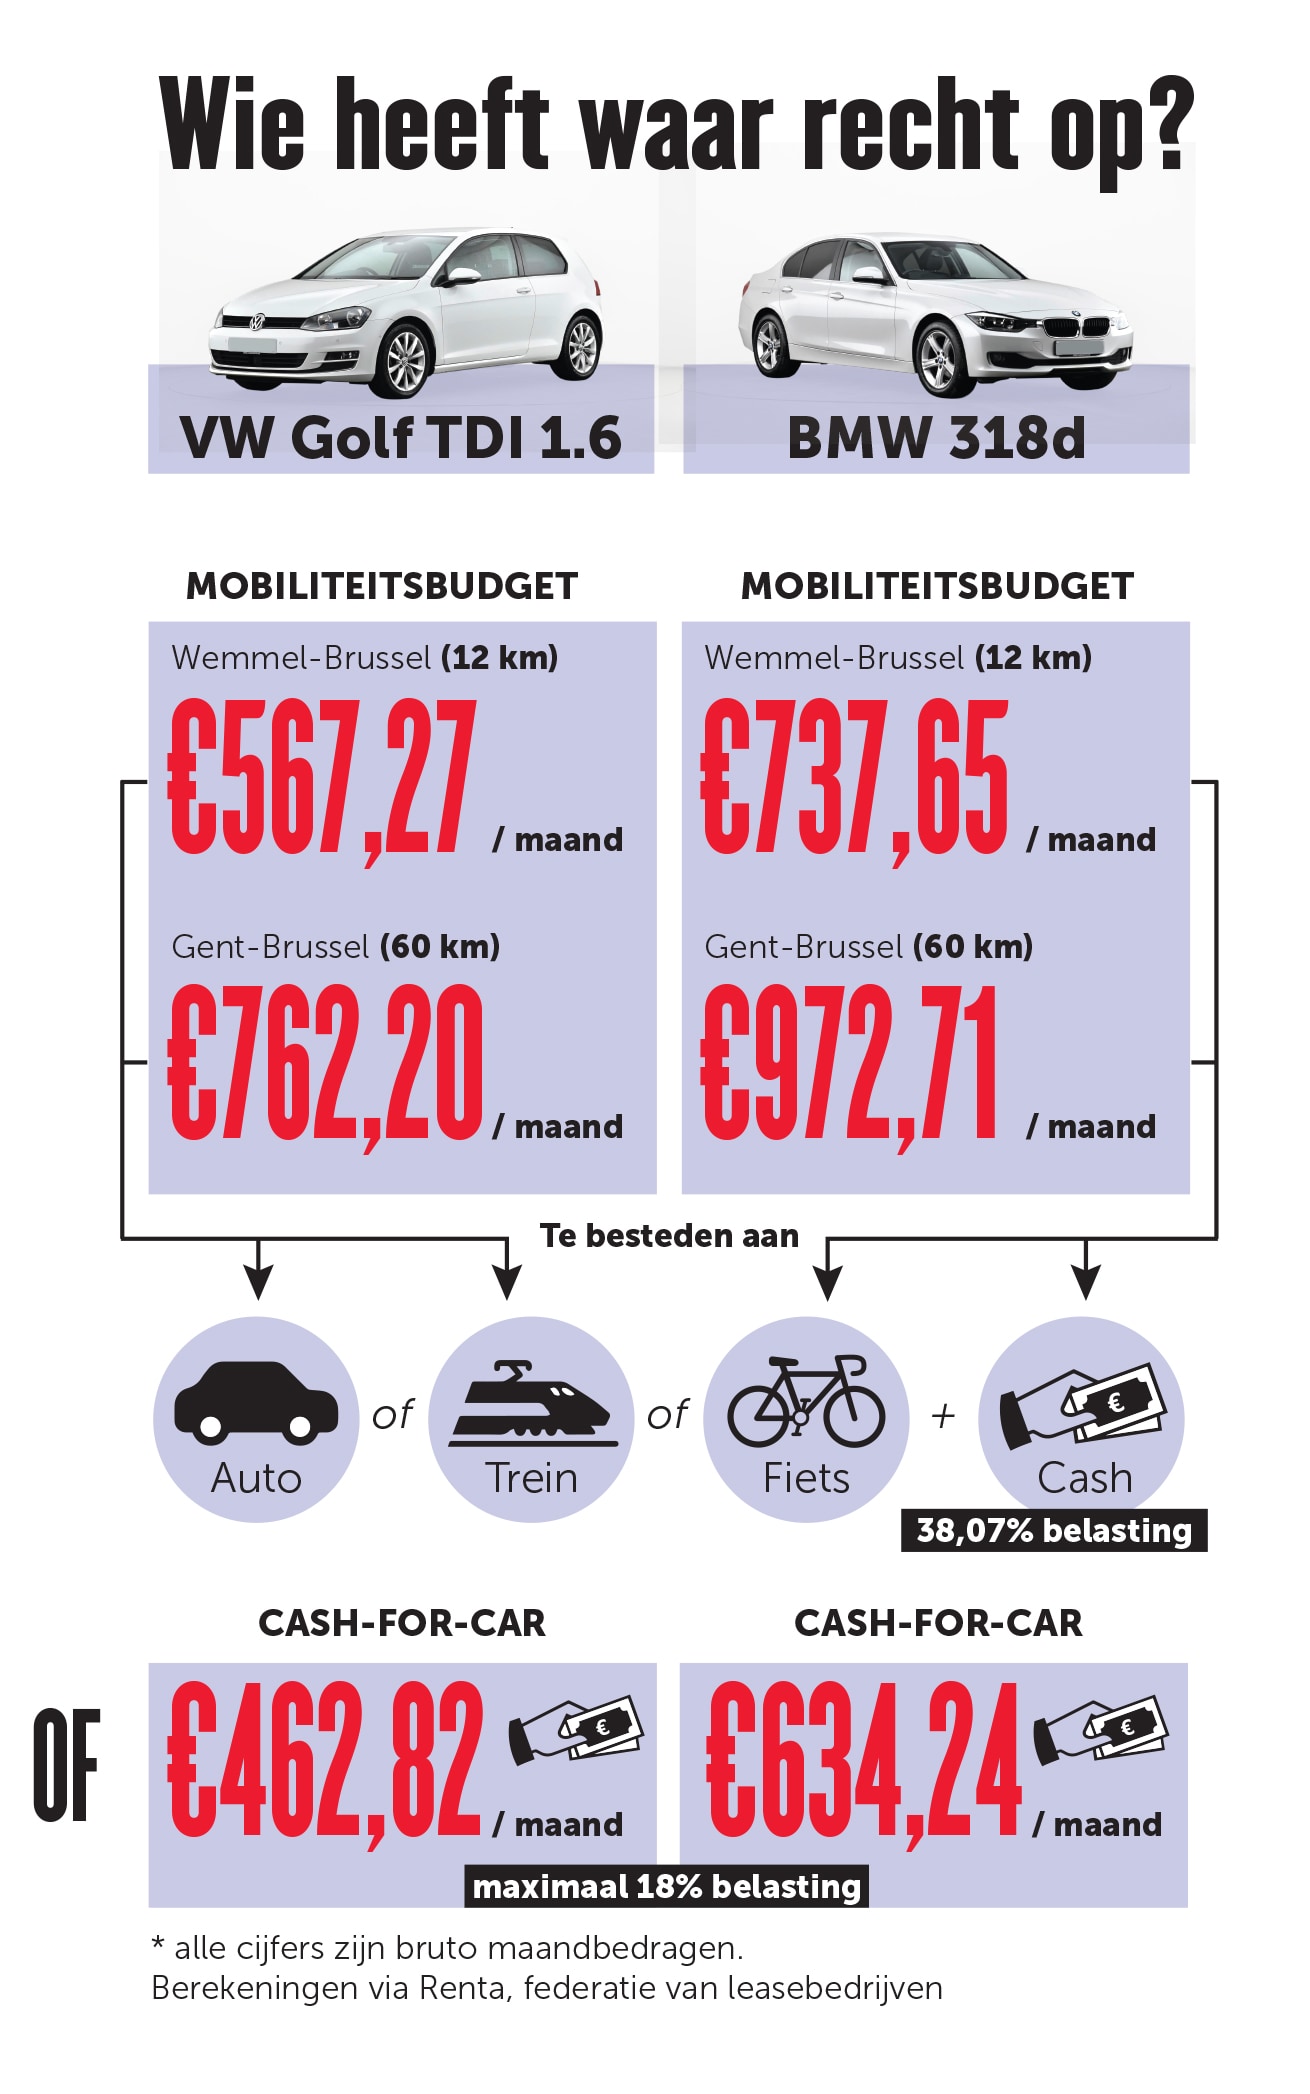 1. Mobiliteitsbudget tot 400 euro hoger dan cash-for-car